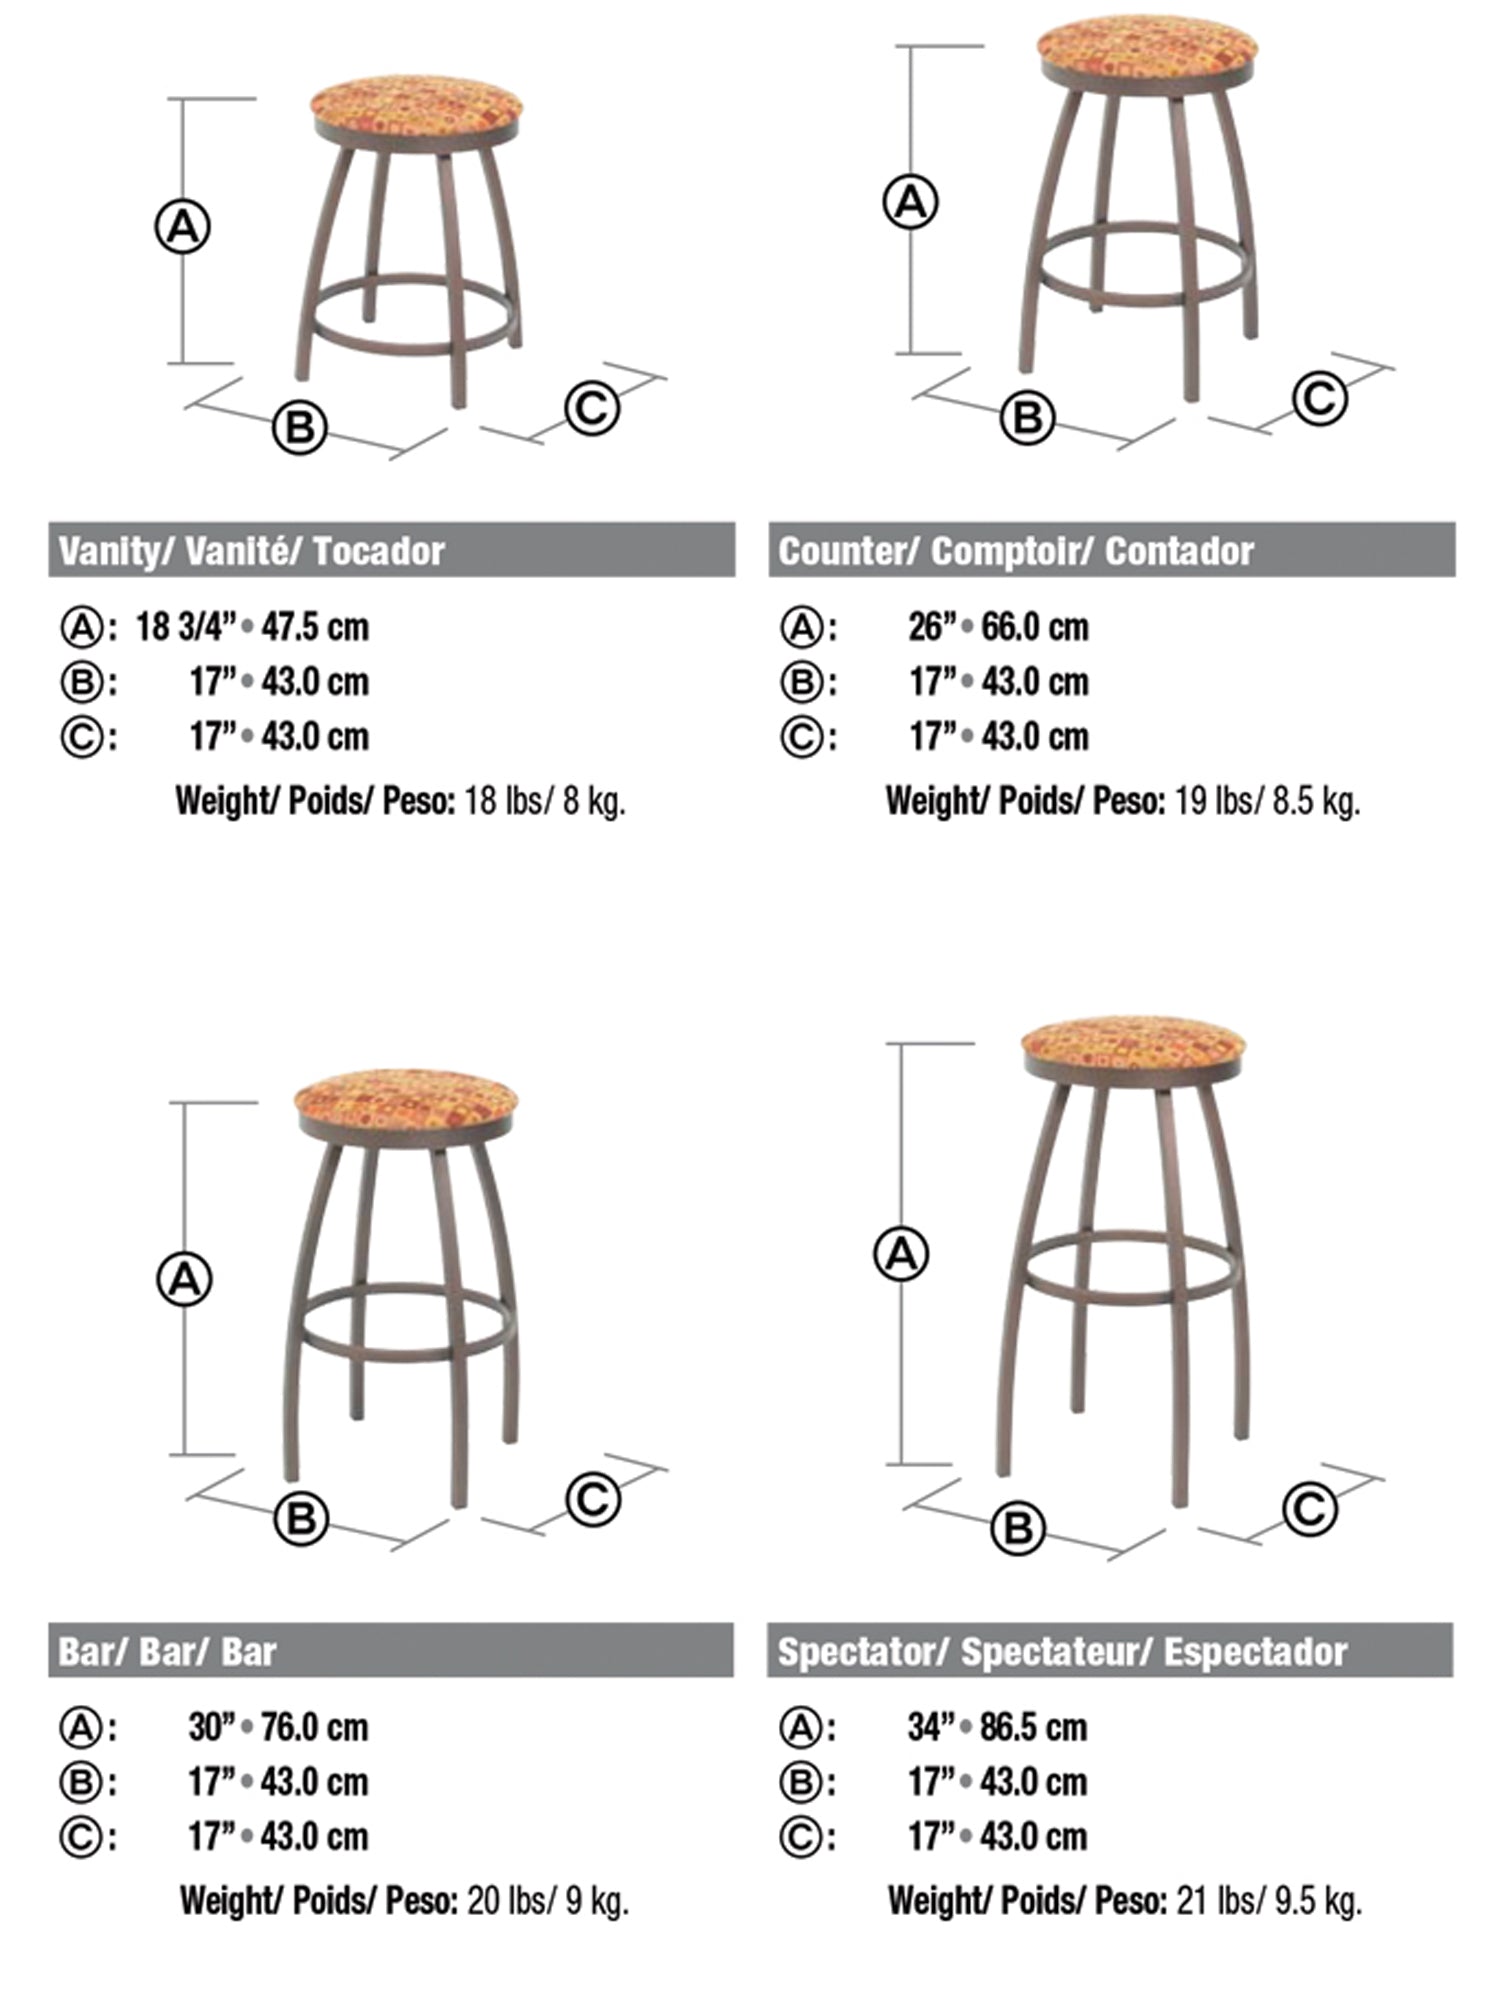 Henry Bar stool - Canadian made, welded steel frame